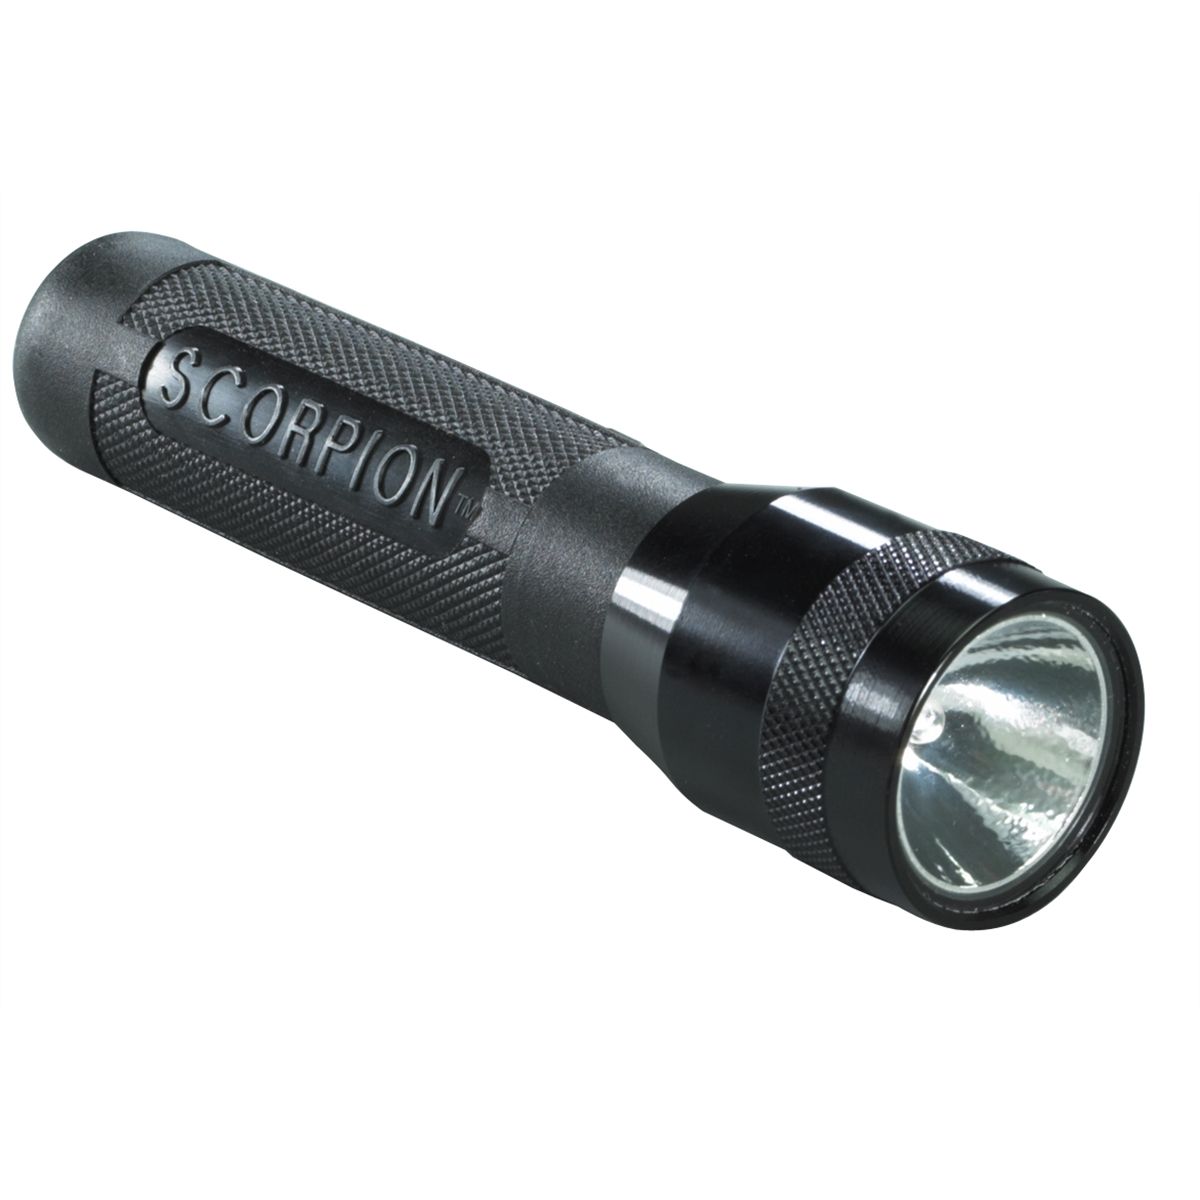 Scorpion Lithium Powered Flashlight